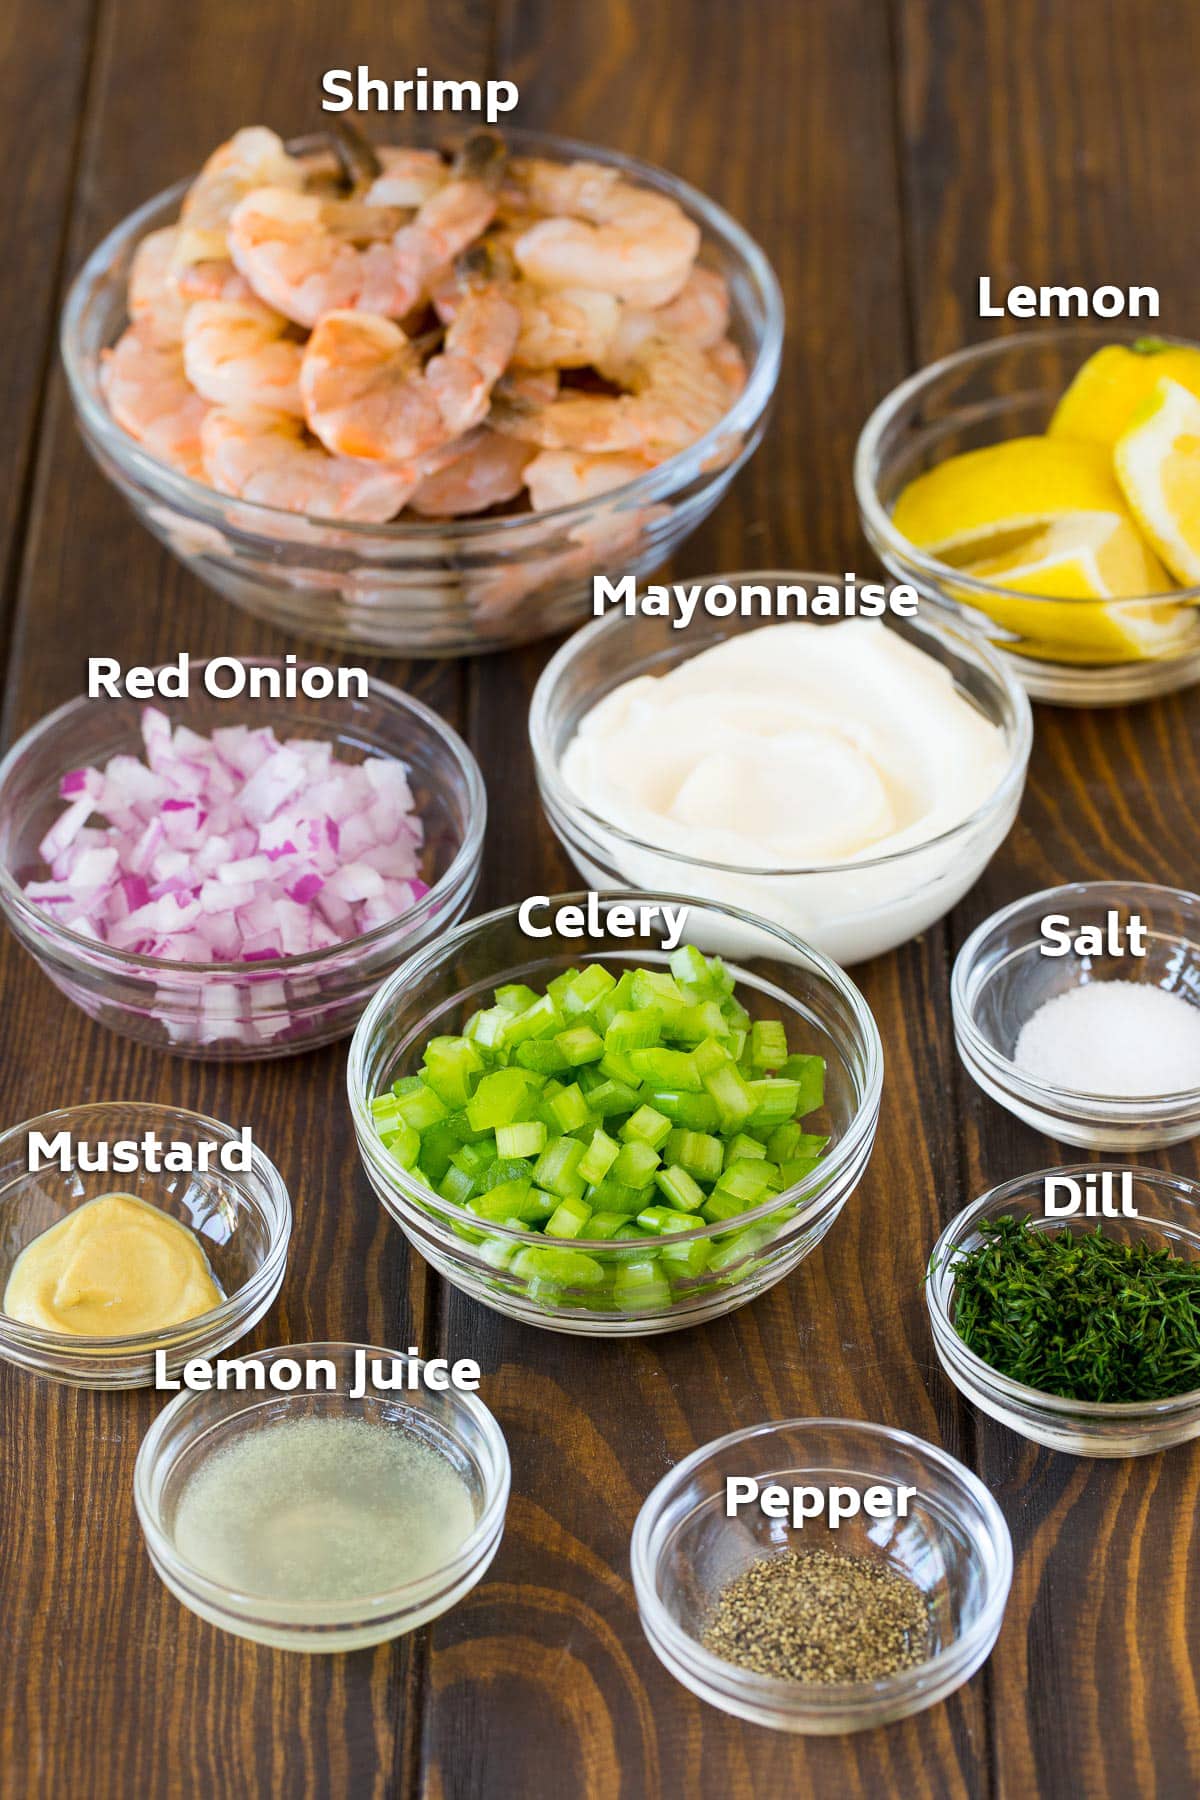 Bowls of ingredients including shrimp, vegetables, mayonnaise, mustard and seasonings.